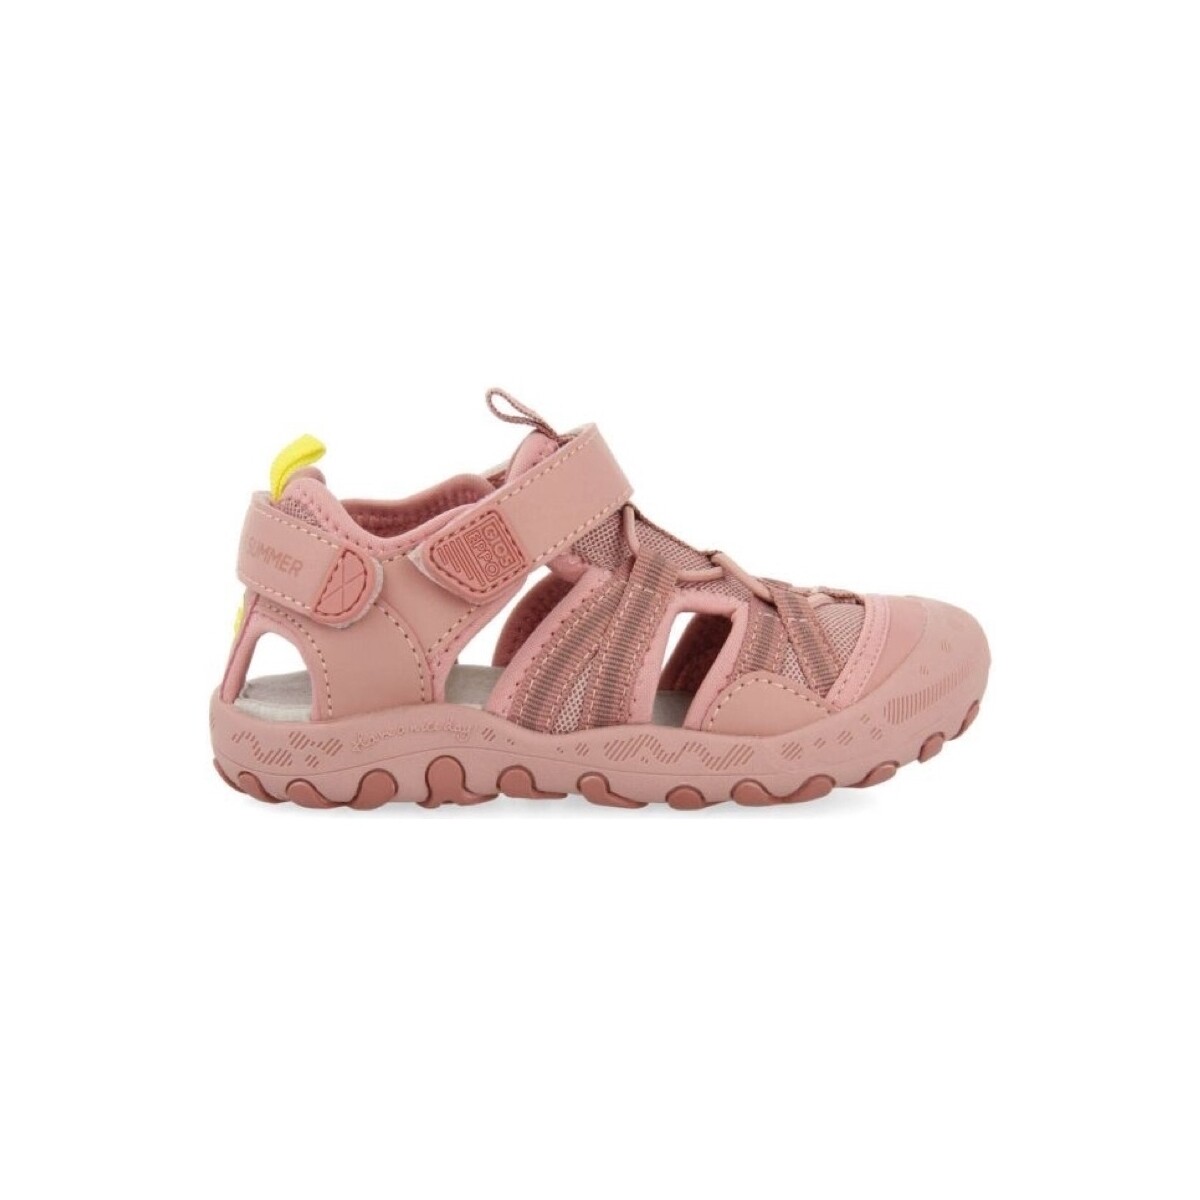 Chaussures Enfant Désir De Fuite Gioseppo Kids Tacuru 68019 - Pink Rose